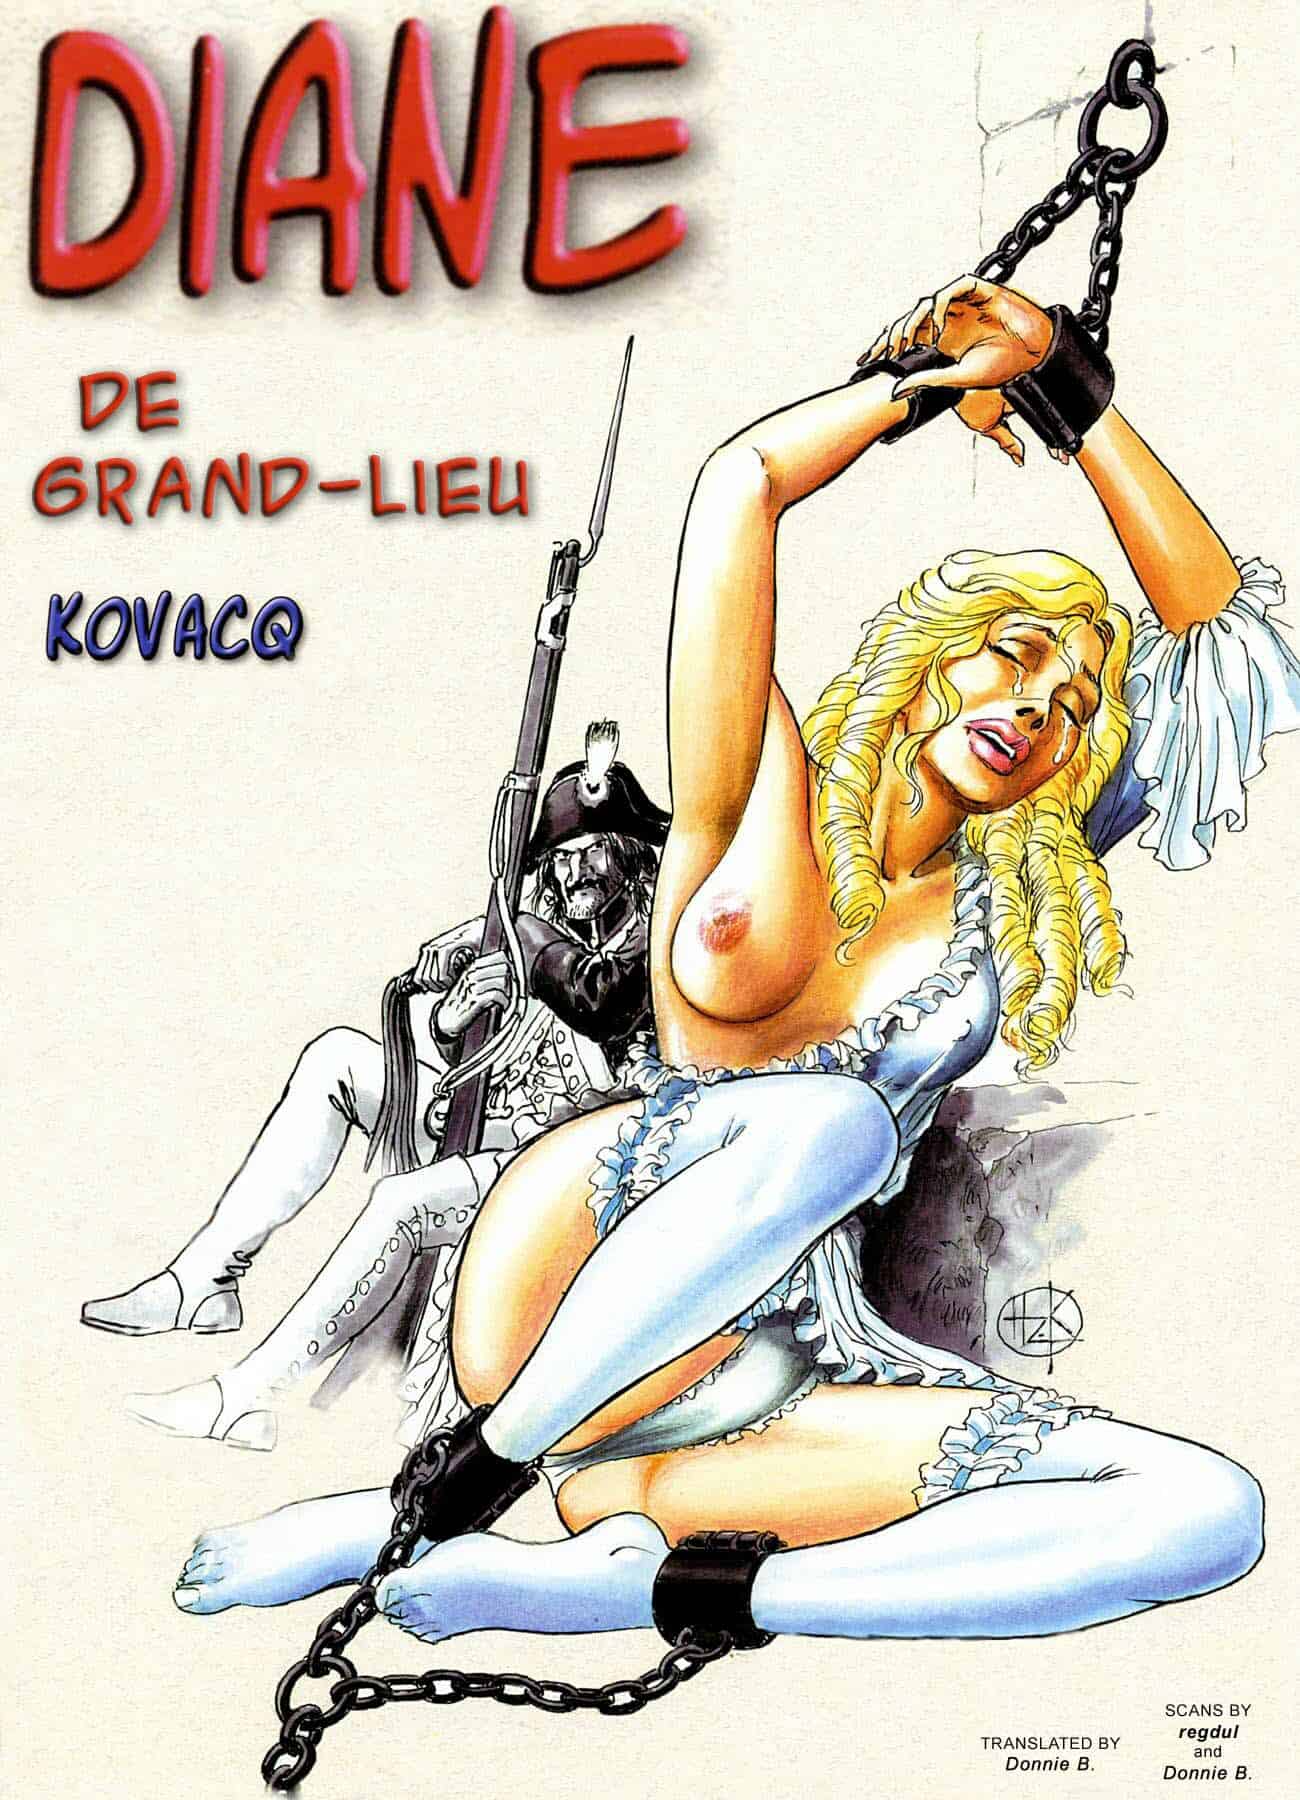 Diane de Grand-Lieu, vol. 1 (Kovacq)